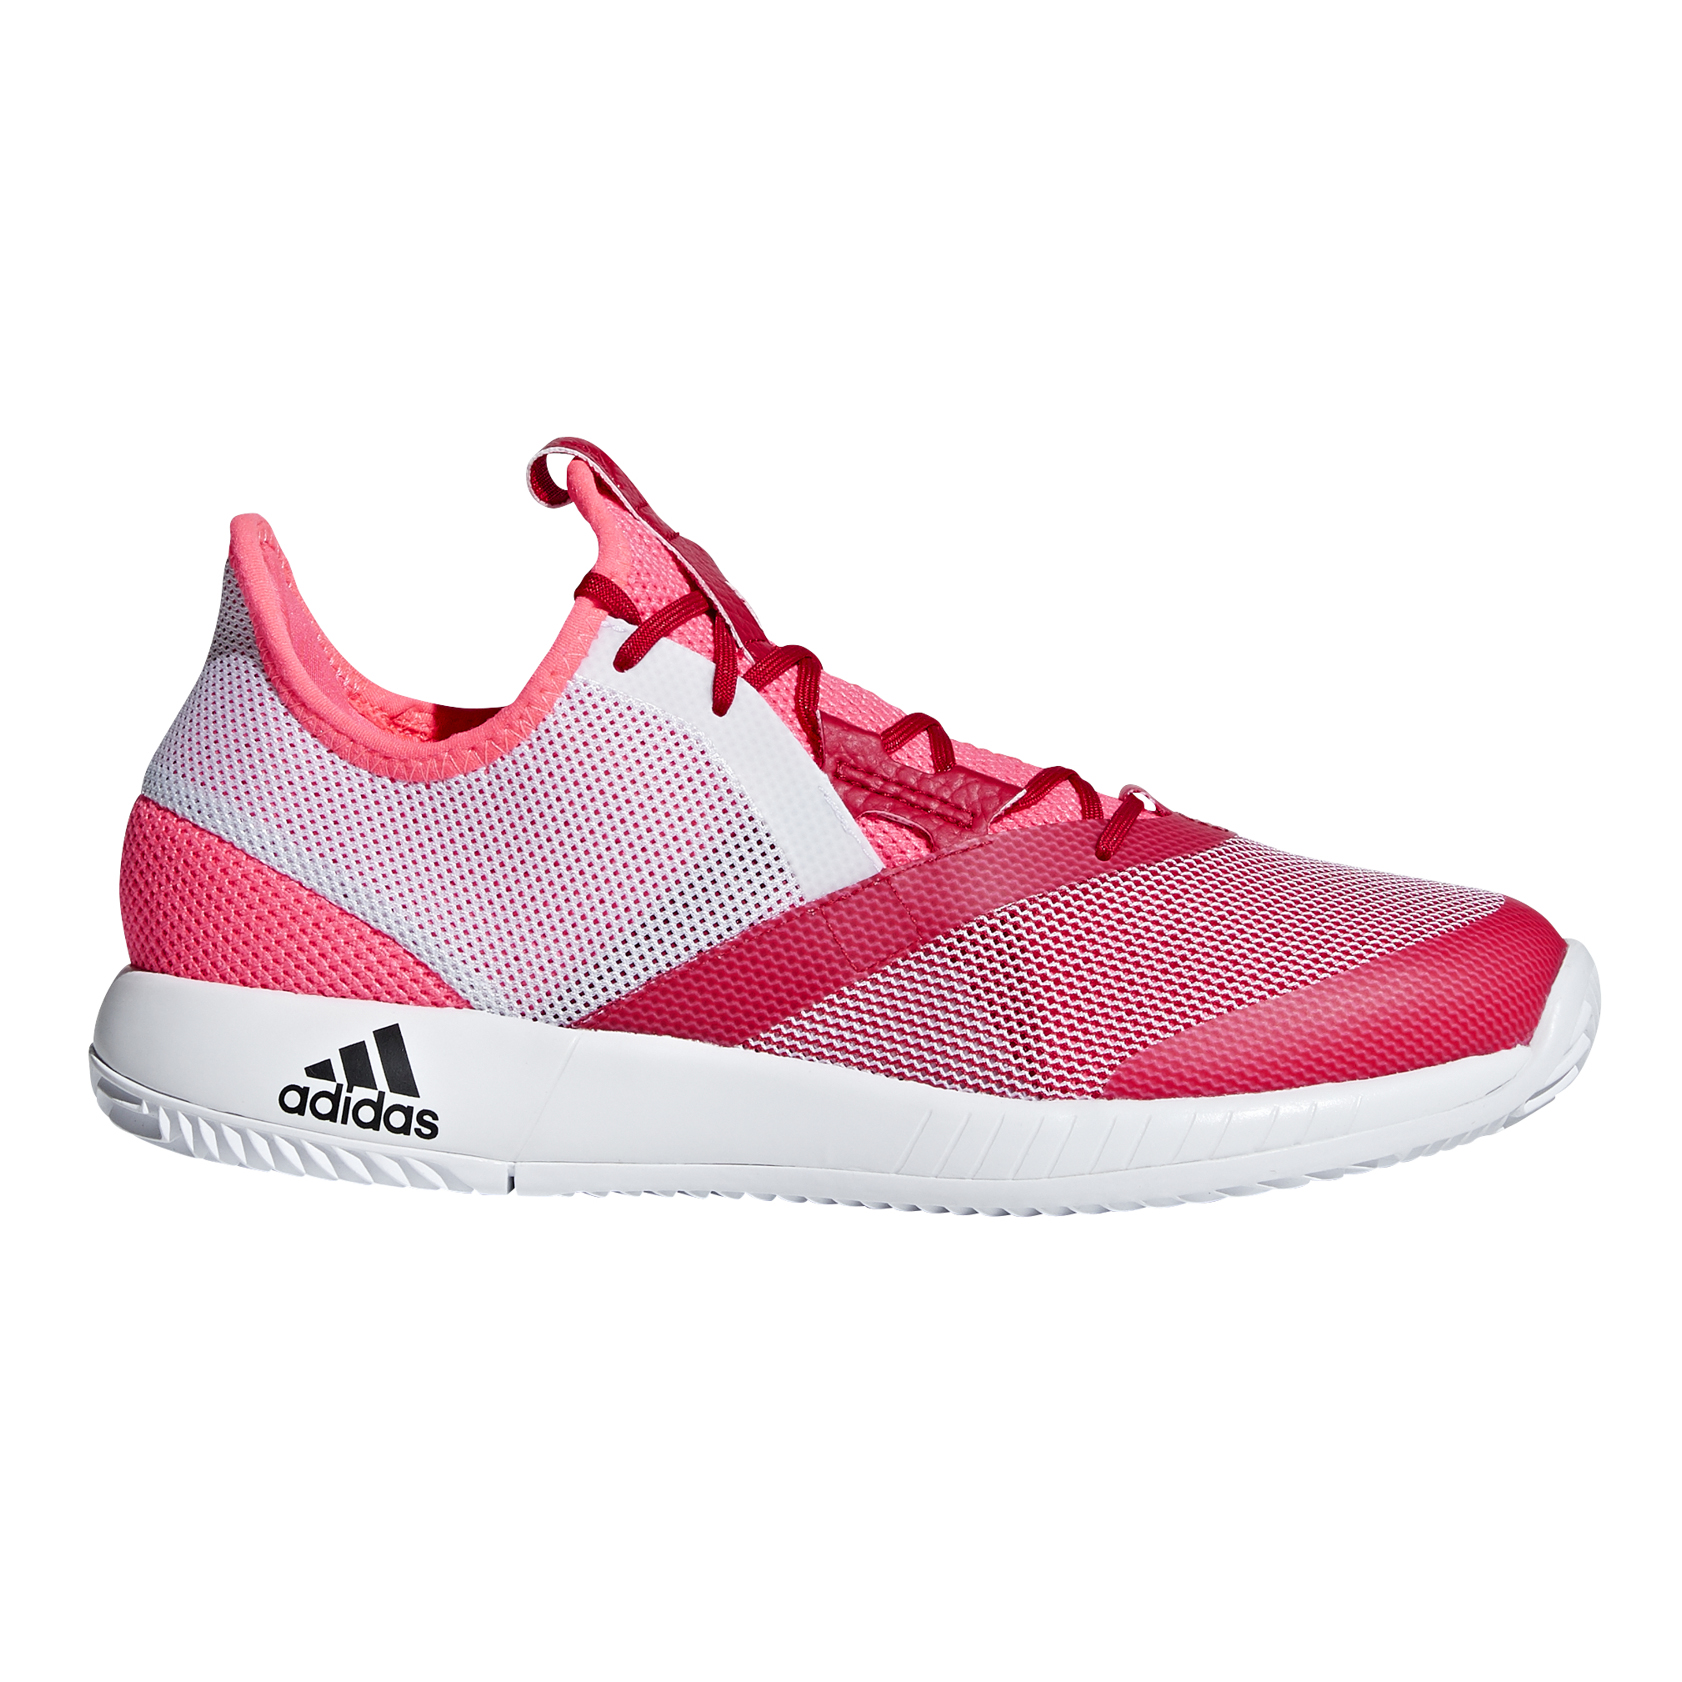 adidas adizero Defiant Bounce Tennis Shoe White/Pink | TOUR Superstore